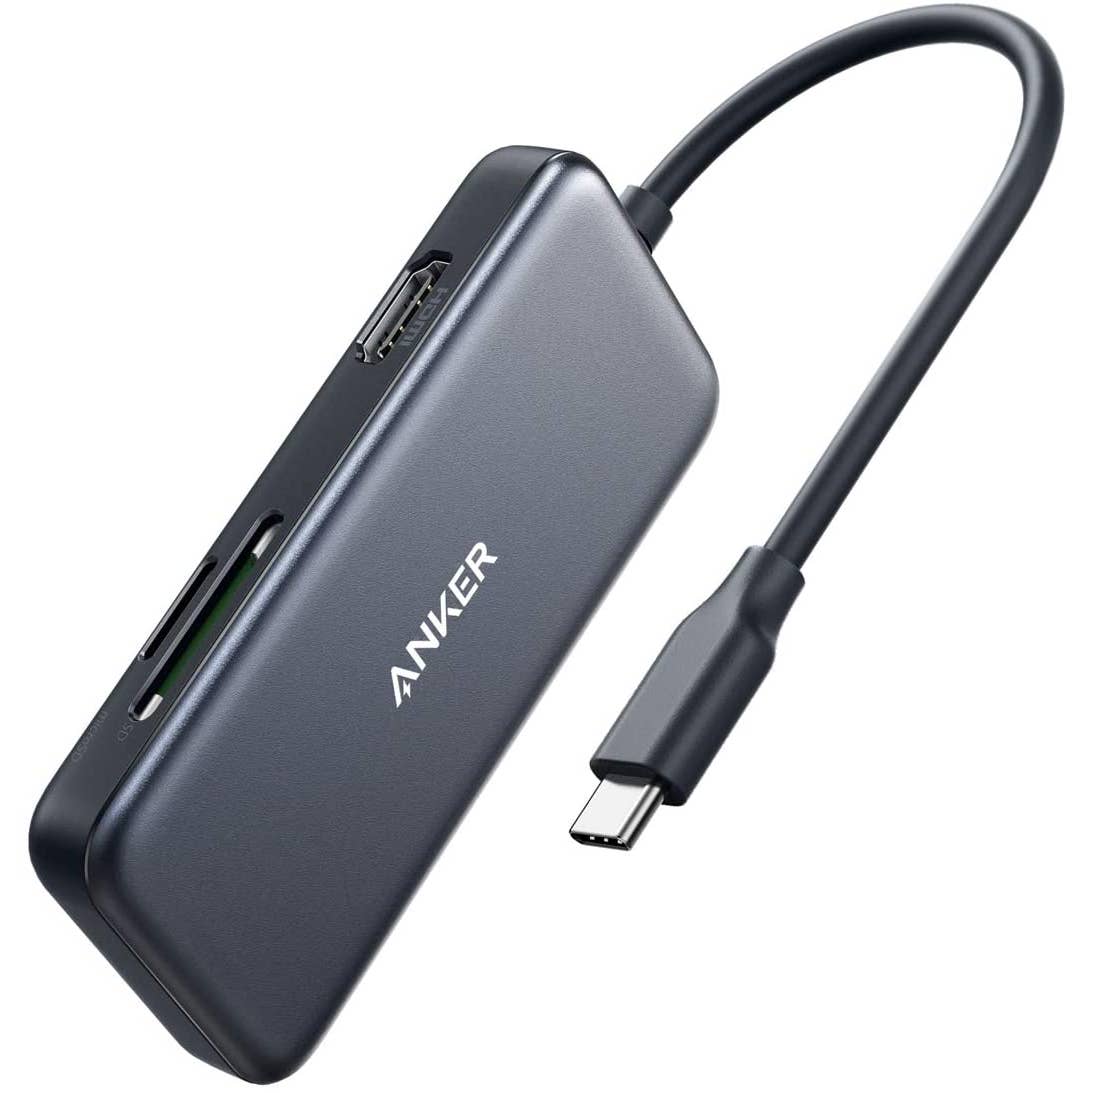 Anker - A83340A1 Premium 5-in-1 USB-C Hub - Gray